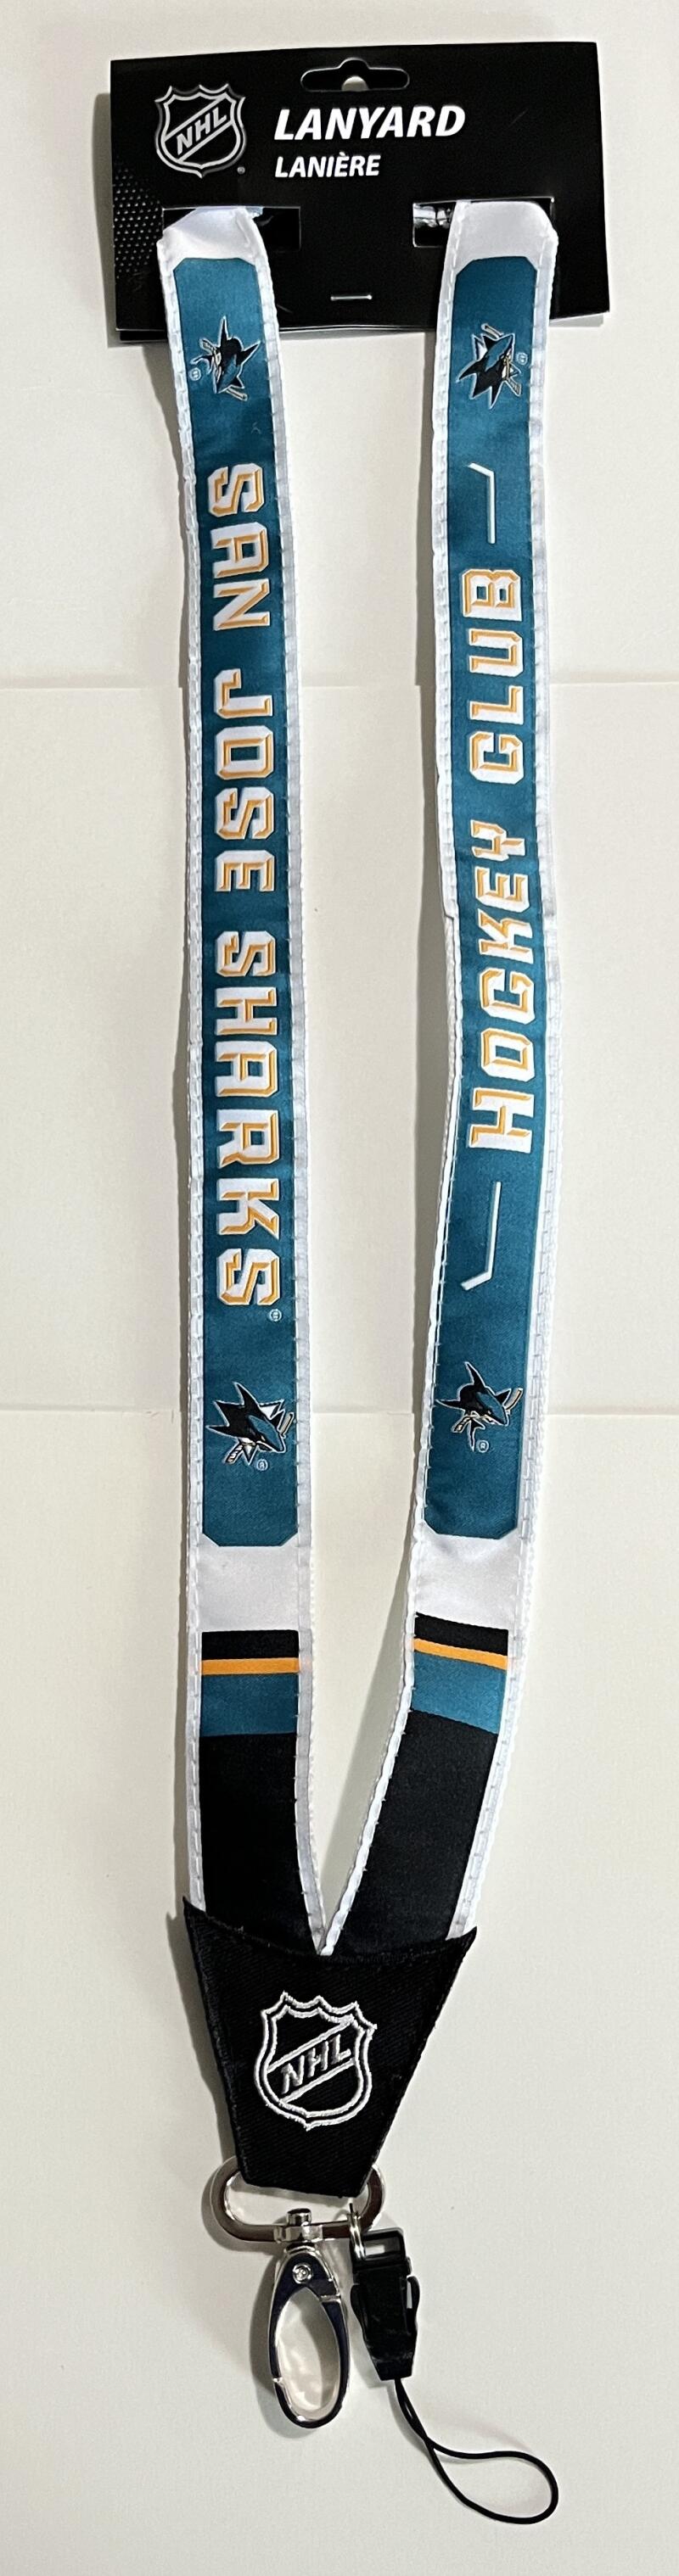 San Jose Sharks Woven Licensed NHL Hockey Lanyard Metal Clasp Image 1